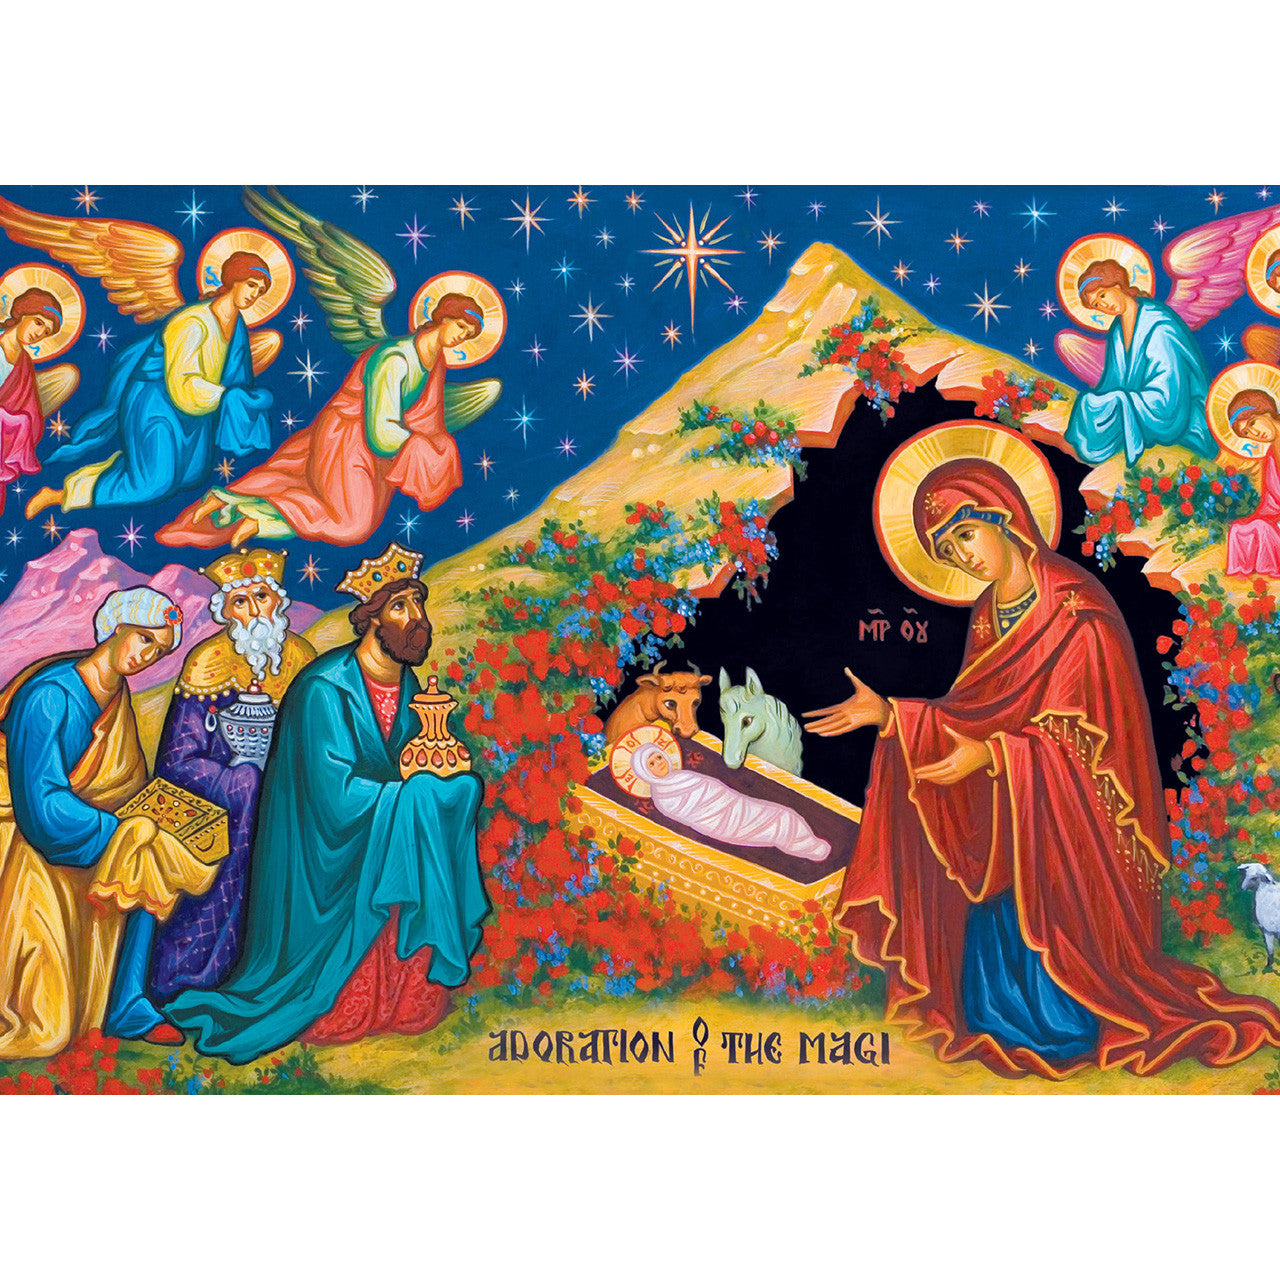 Adoration of the Magi Christmas card